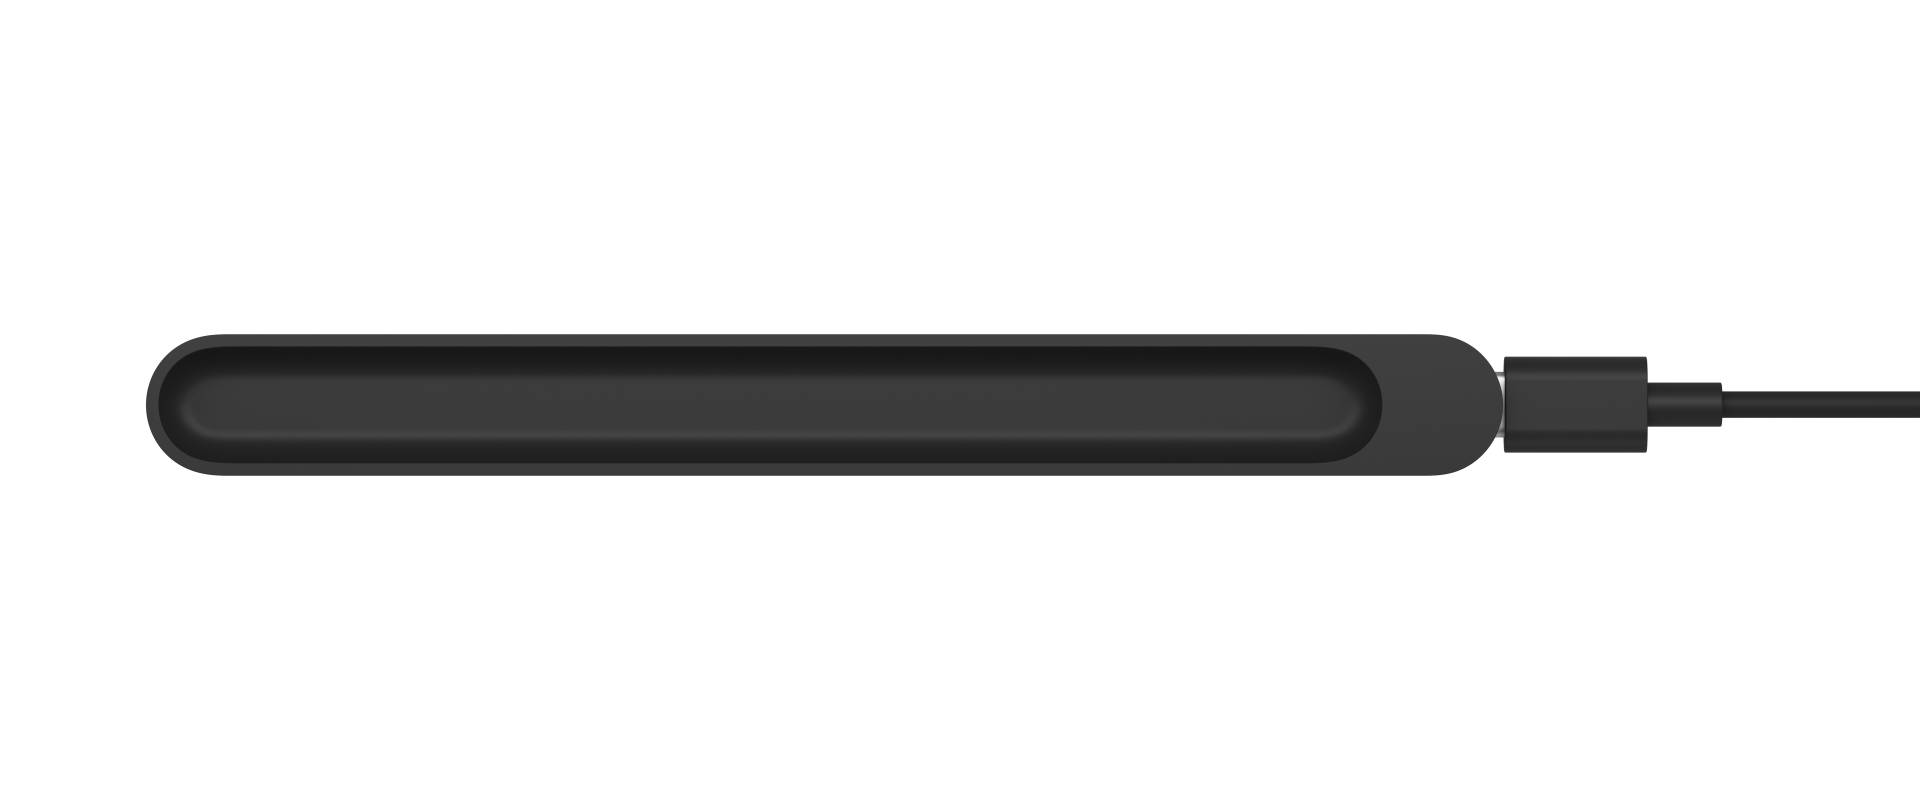 Microsoft Slim Pen Charger von Microsoft